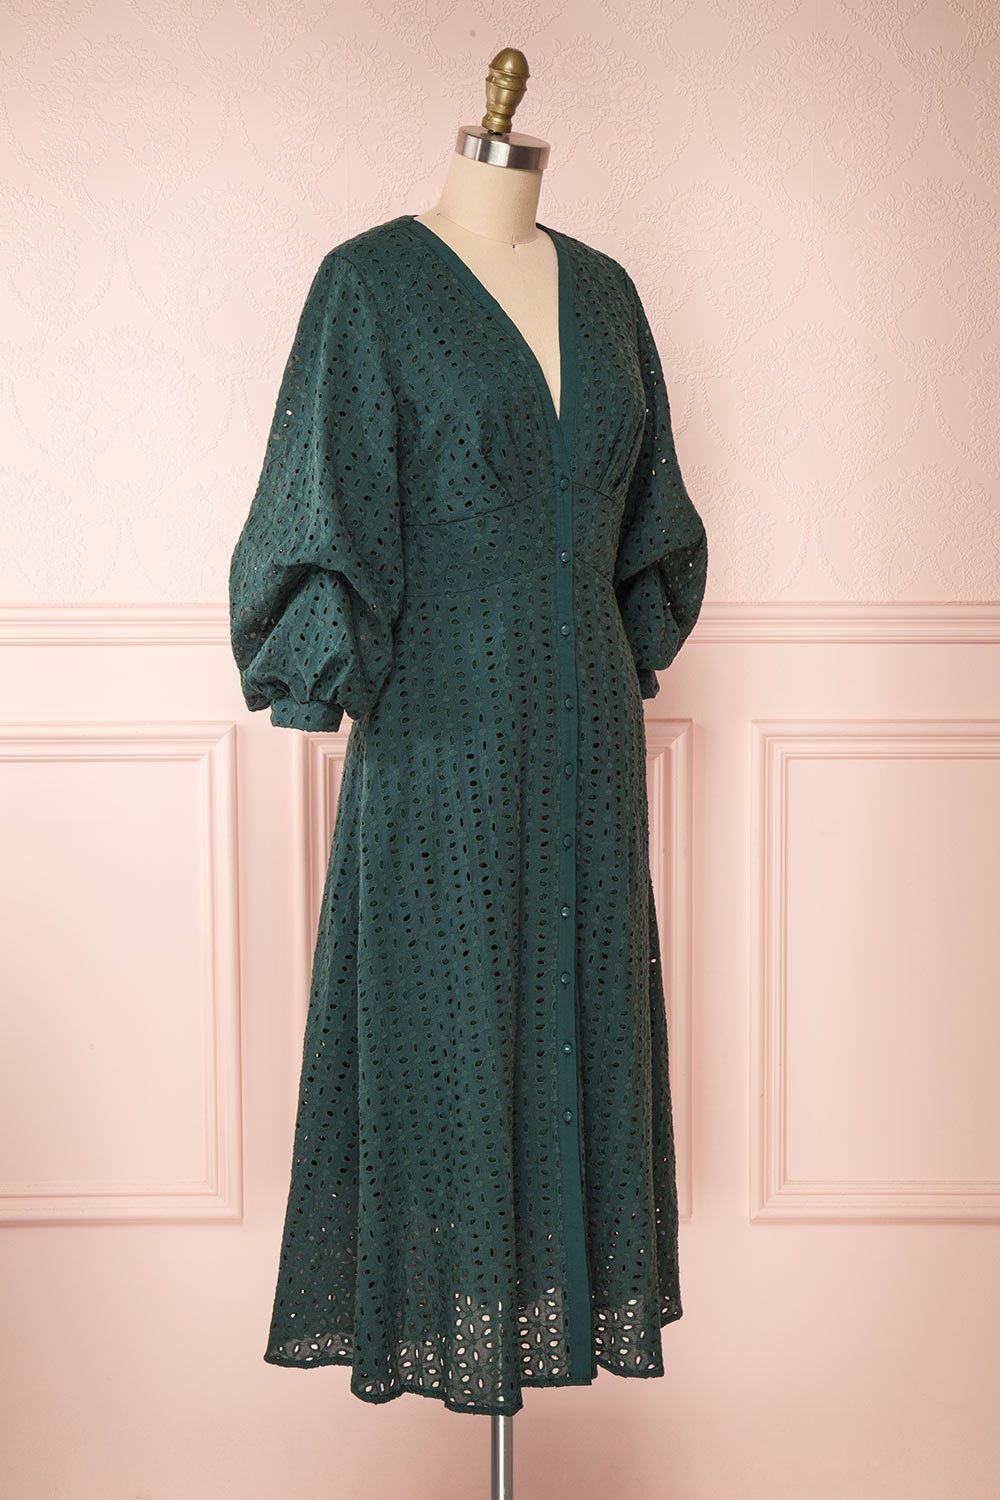 Adalynn Vert Lace Midi A-Line Dress | Robe side view | Boutique 1861